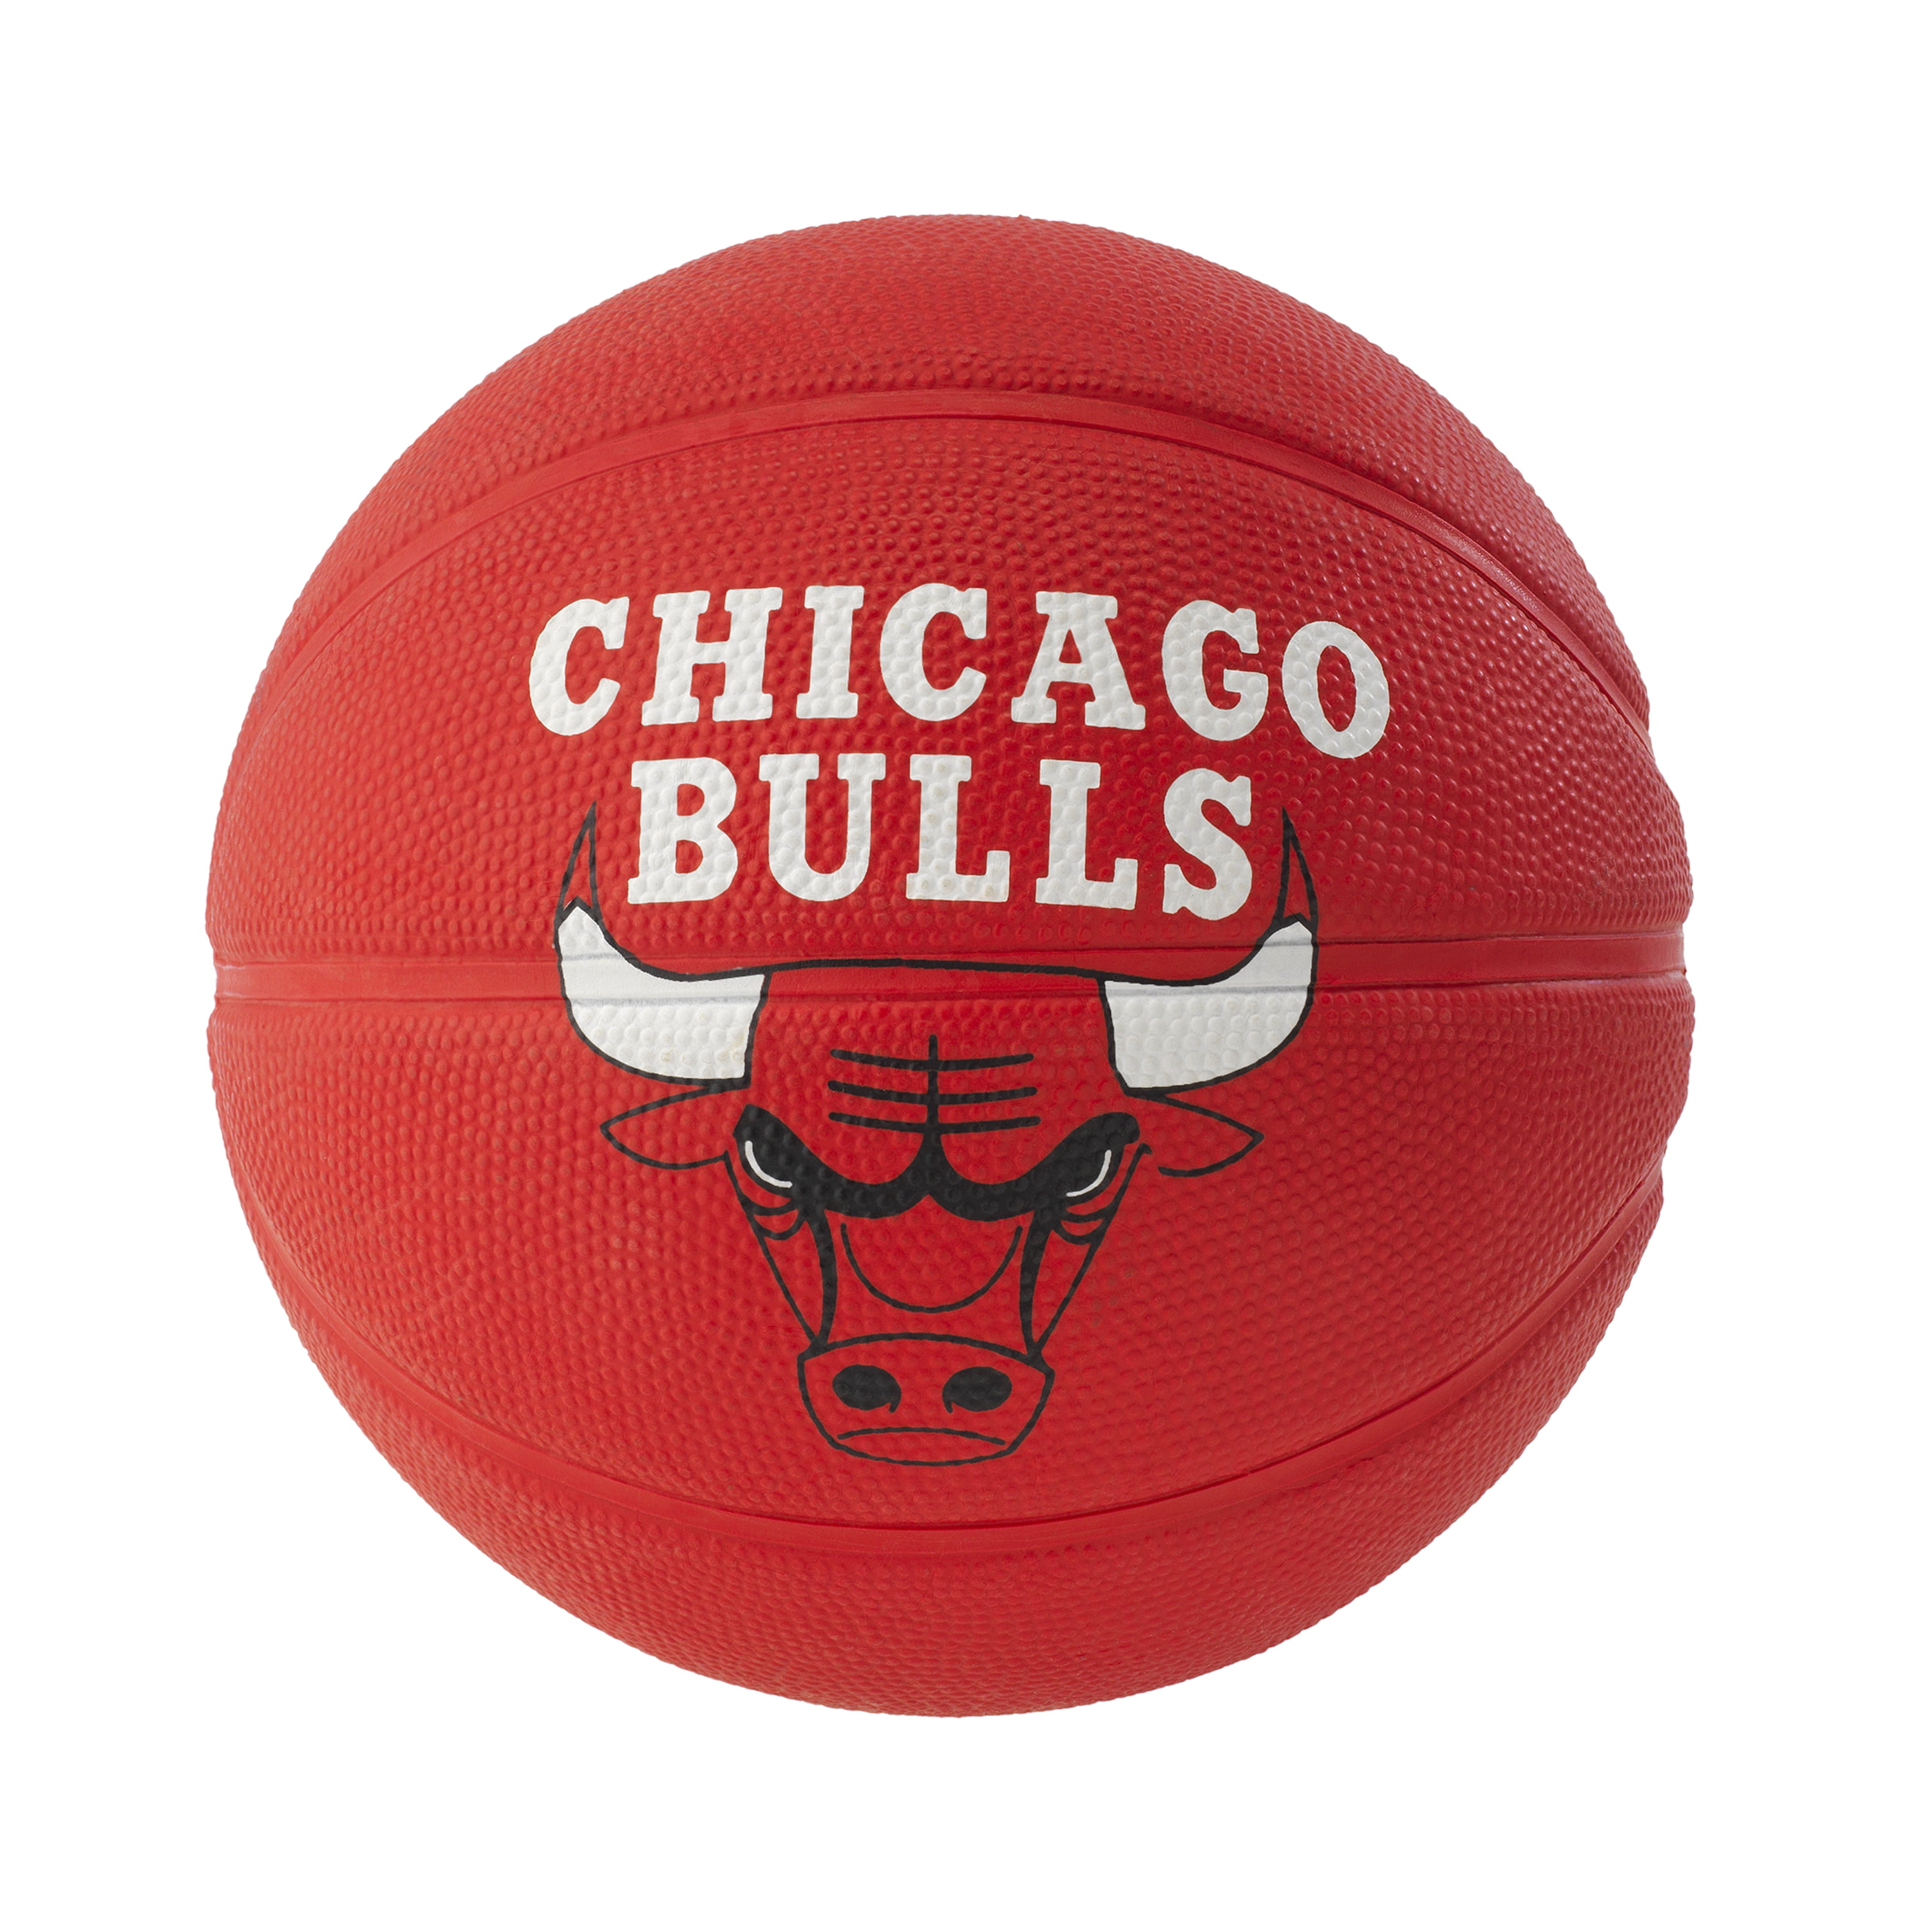 Spalding NBA 7 Mini Basketball, Chicago Bulls